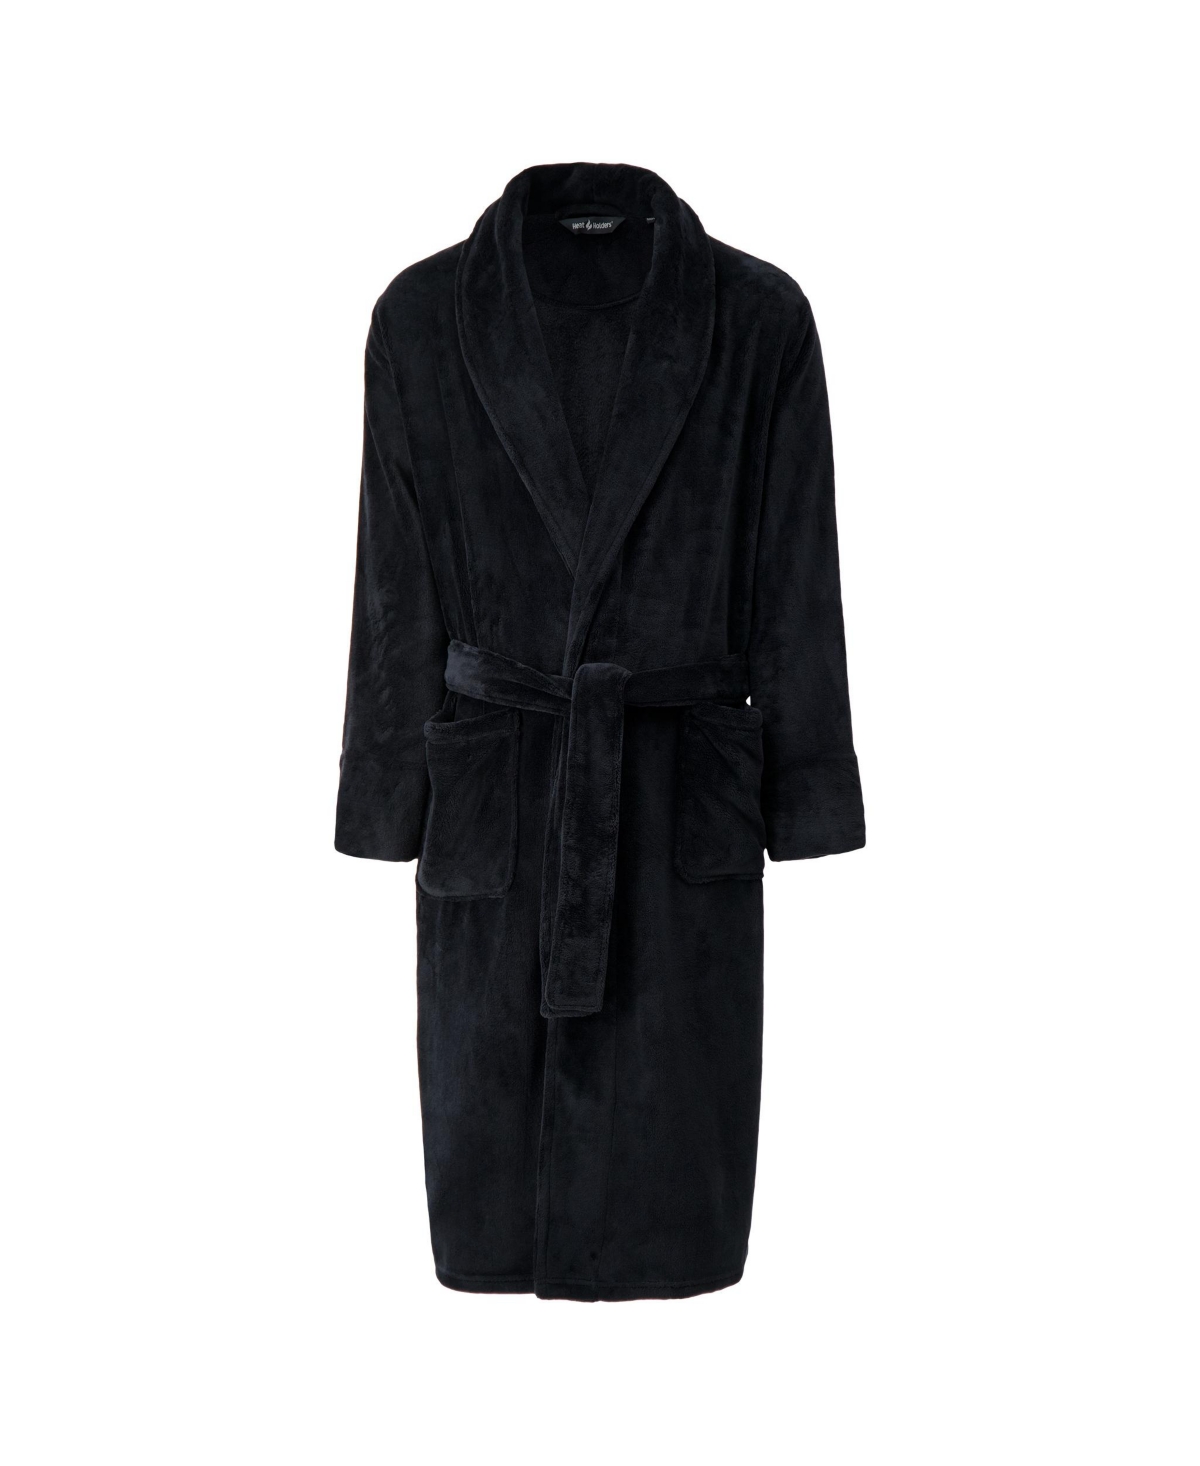 Men's Long Sleeve Spa Robe - Black